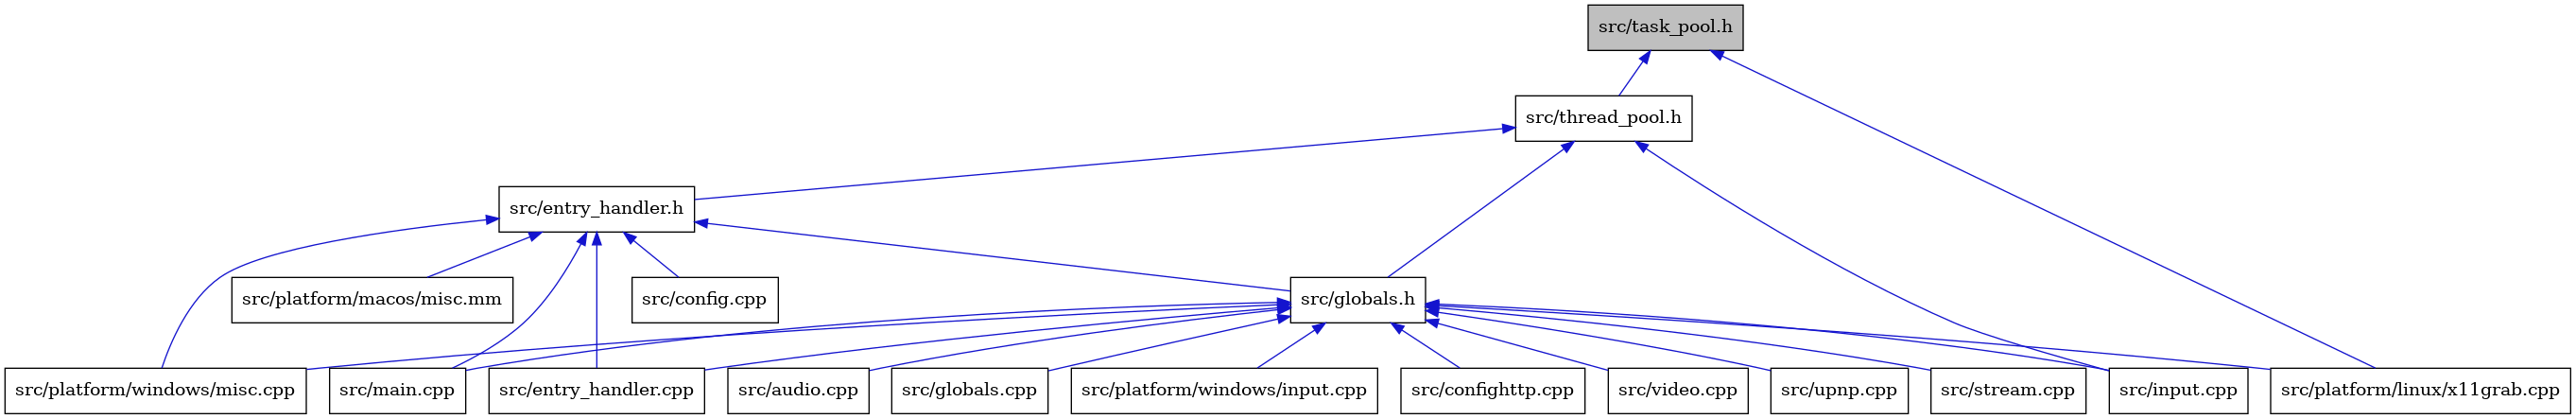 digraph {
    graph [bgcolor="#00000000"]
    node [shape=rectangle style=filled fillcolor="#FFFFFF" font=Helvetica padding=2]
    edge [color="#1414CE"]
    "7" [label="src/globals.h" tooltip="src/globals.h"]
    "4" [label="src/entry_handler.h" tooltip="src/entry_handler.h"]
    "13" [label="src/platform/windows/input.cpp" tooltip="src/platform/windows/input.cpp"]
    "6" [label="src/entry_handler.cpp" tooltip="src/entry_handler.cpp"]
    "5" [label="src/config.cpp" tooltip="src/config.cpp"]
    "11" [label="src/input.cpp" tooltip="src/input.cpp"]
    "9" [label="src/confighttp.cpp" tooltip="src/confighttp.cpp"]
    "17" [label="src/video.cpp" tooltip="src/video.cpp"]
    "1" [label="src/task_pool.h" tooltip="src/task_pool.h" fillcolor="#BFBFBF"]
    "16" [label="src/upnp.cpp" tooltip="src/upnp.cpp"]
    "3" [label="src/thread_pool.h" tooltip="src/thread_pool.h"]
    "15" [label="src/stream.cpp" tooltip="src/stream.cpp"]
    "8" [label="src/audio.cpp" tooltip="src/audio.cpp"]
    "10" [label="src/globals.cpp" tooltip="src/globals.cpp"]
    "14" [label="src/platform/windows/misc.cpp" tooltip="src/platform/windows/misc.cpp"]
    "18" [label="src/platform/macos/misc.mm" tooltip="src/platform/macos/misc.mm"]
    "2" [label="src/platform/linux/x11grab.cpp" tooltip="src/platform/linux/x11grab.cpp"]
    "12" [label="src/main.cpp" tooltip="src/main.cpp"]
    "7" -> "8" [dir=back tooltip="include"]
    "7" -> "9" [dir=back tooltip="include"]
    "7" -> "6" [dir=back tooltip="include"]
    "7" -> "10" [dir=back tooltip="include"]
    "7" -> "11" [dir=back tooltip="include"]
    "7" -> "12" [dir=back tooltip="include"]
    "7" -> "2" [dir=back tooltip="include"]
    "7" -> "13" [dir=back tooltip="include"]
    "7" -> "14" [dir=back tooltip="include"]
    "7" -> "15" [dir=back tooltip="include"]
    "7" -> "16" [dir=back tooltip="include"]
    "7" -> "17" [dir=back tooltip="include"]
    "4" -> "5" [dir=back tooltip="include"]
    "4" -> "6" [dir=back tooltip="include"]
    "4" -> "7" [dir=back tooltip="include"]
    "4" -> "12" [dir=back tooltip="include"]
    "4" -> "18" [dir=back tooltip="include"]
    "4" -> "14" [dir=back tooltip="include"]
    "1" -> "2" [dir=back tooltip="include"]
    "1" -> "3" [dir=back tooltip="include"]
    "3" -> "4" [dir=back tooltip="include"]
    "3" -> "7" [dir=back tooltip="include"]
    "3" -> "11" [dir=back tooltip="include"]
}